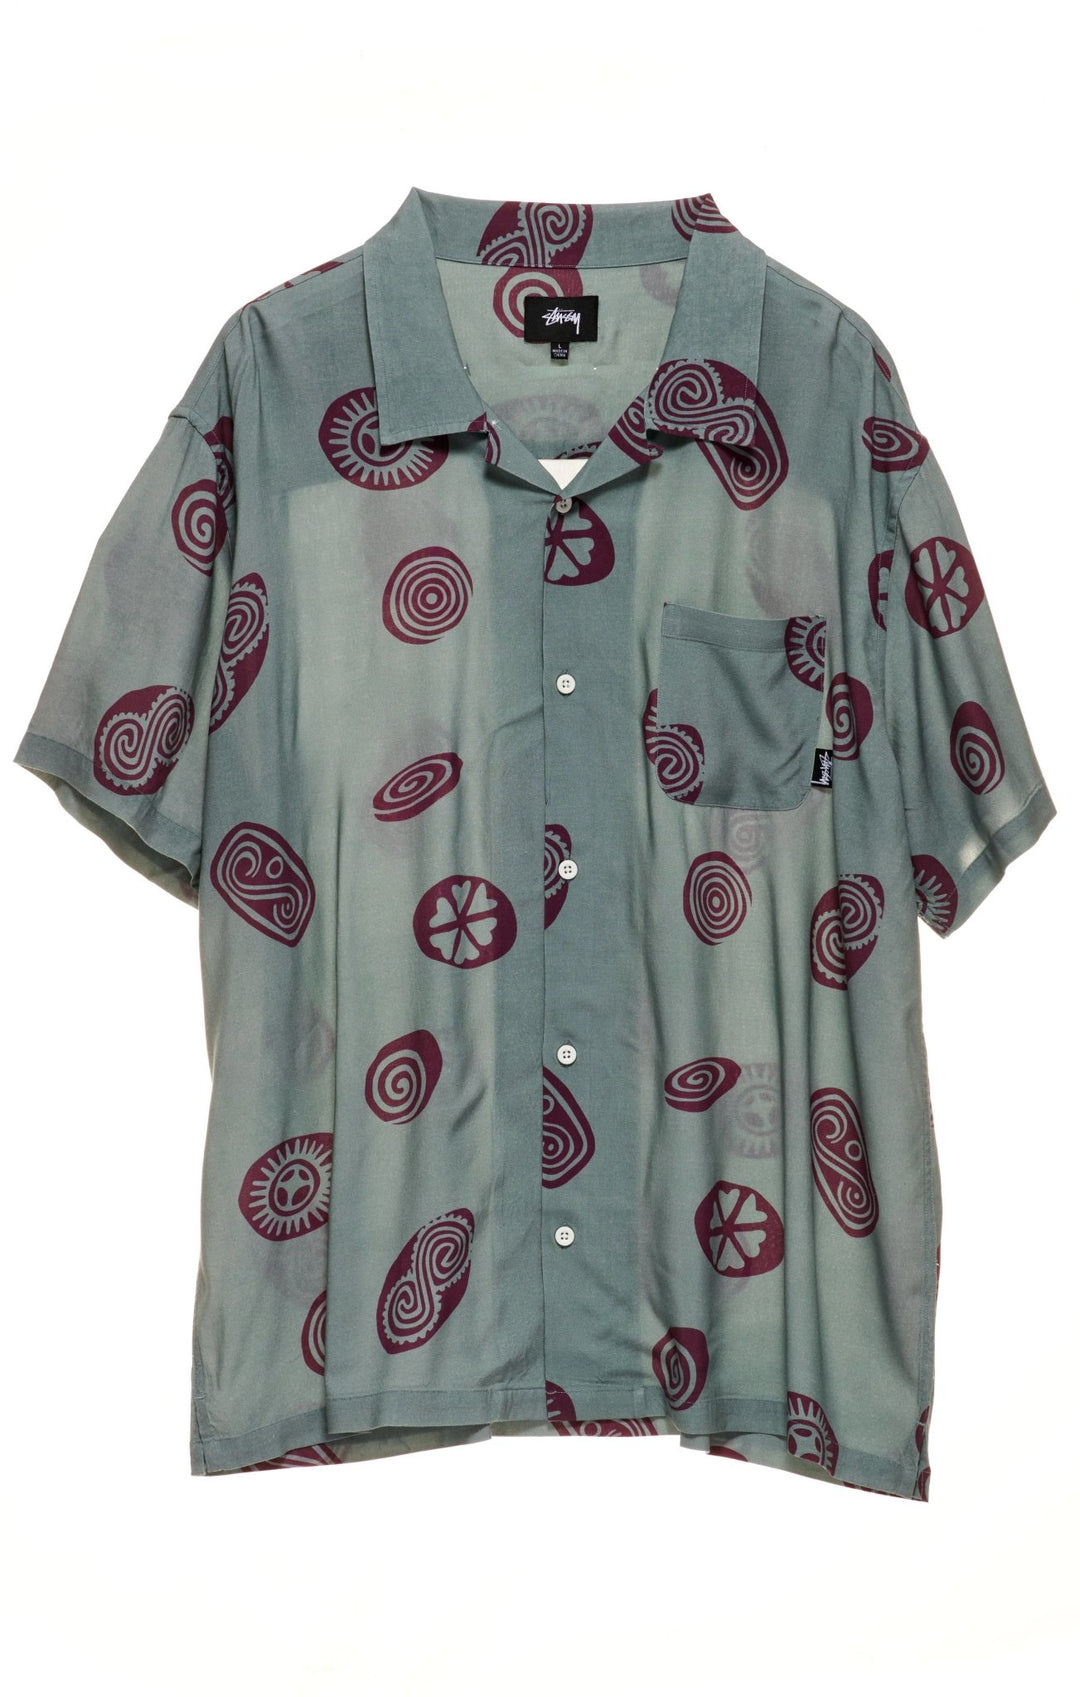 Icon Pattern SS Shirt - Chillis & More NZ